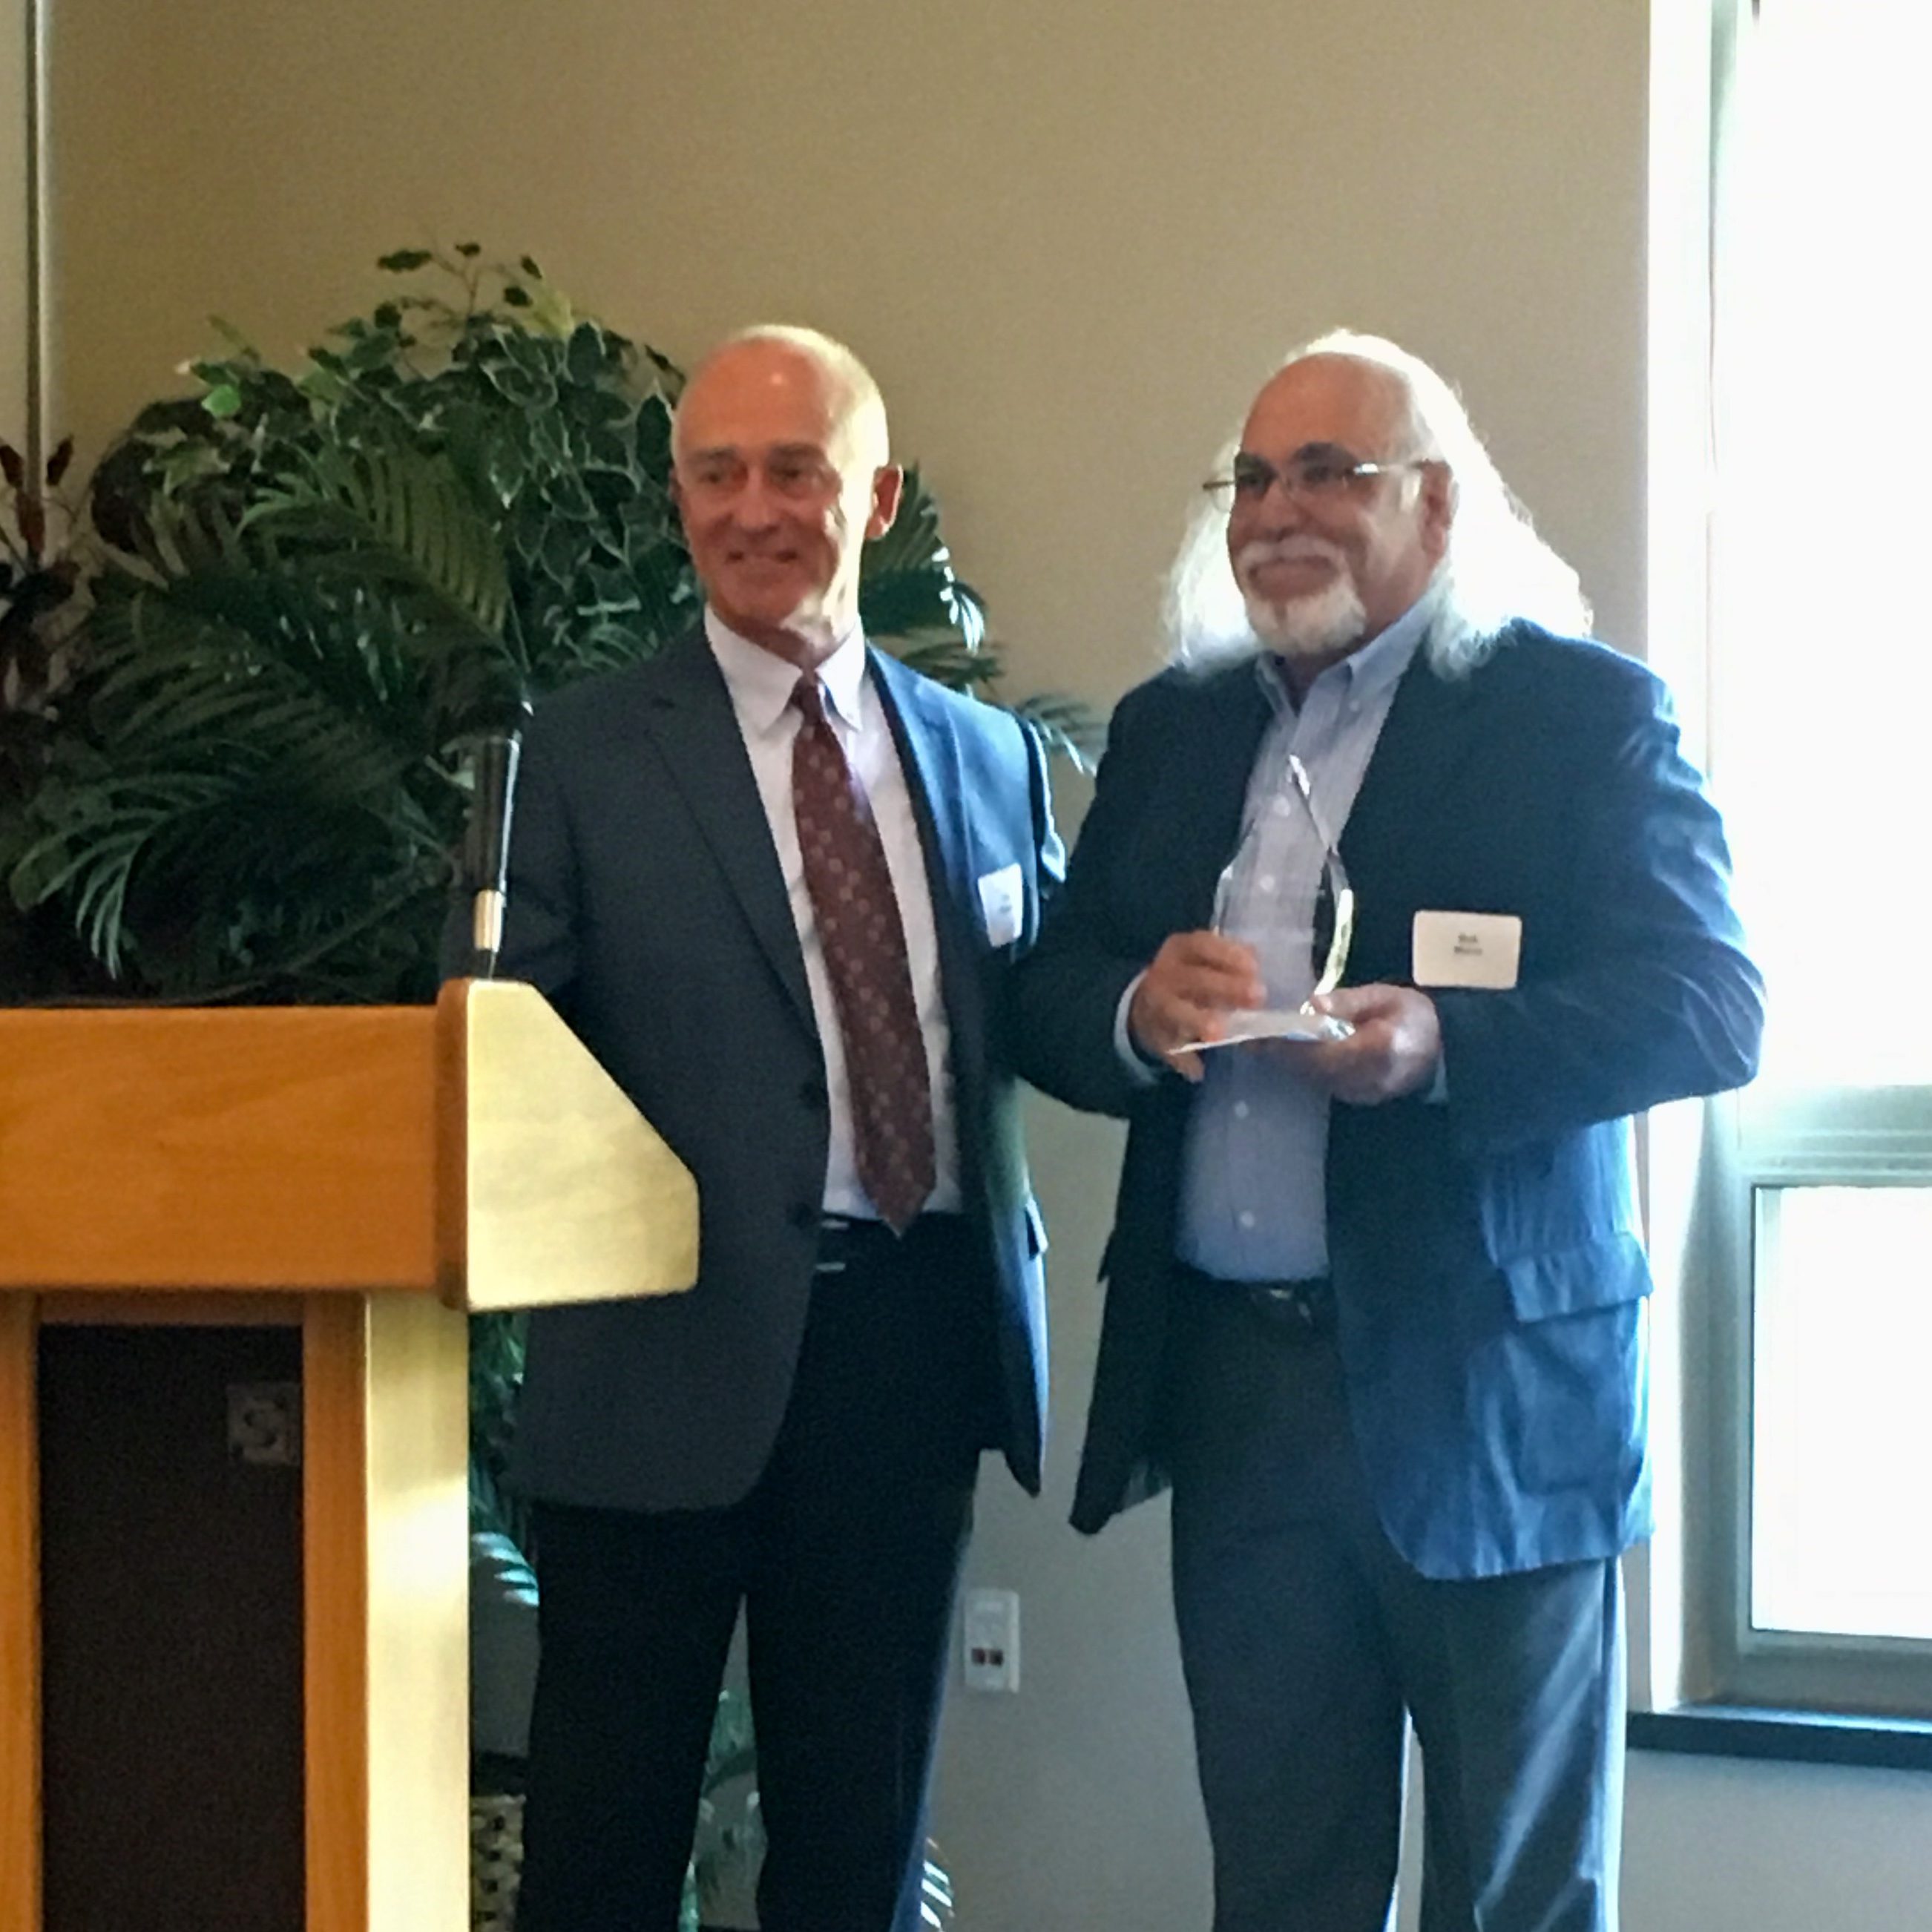 Bob Mazza Receives Award from the North East Community Foundation